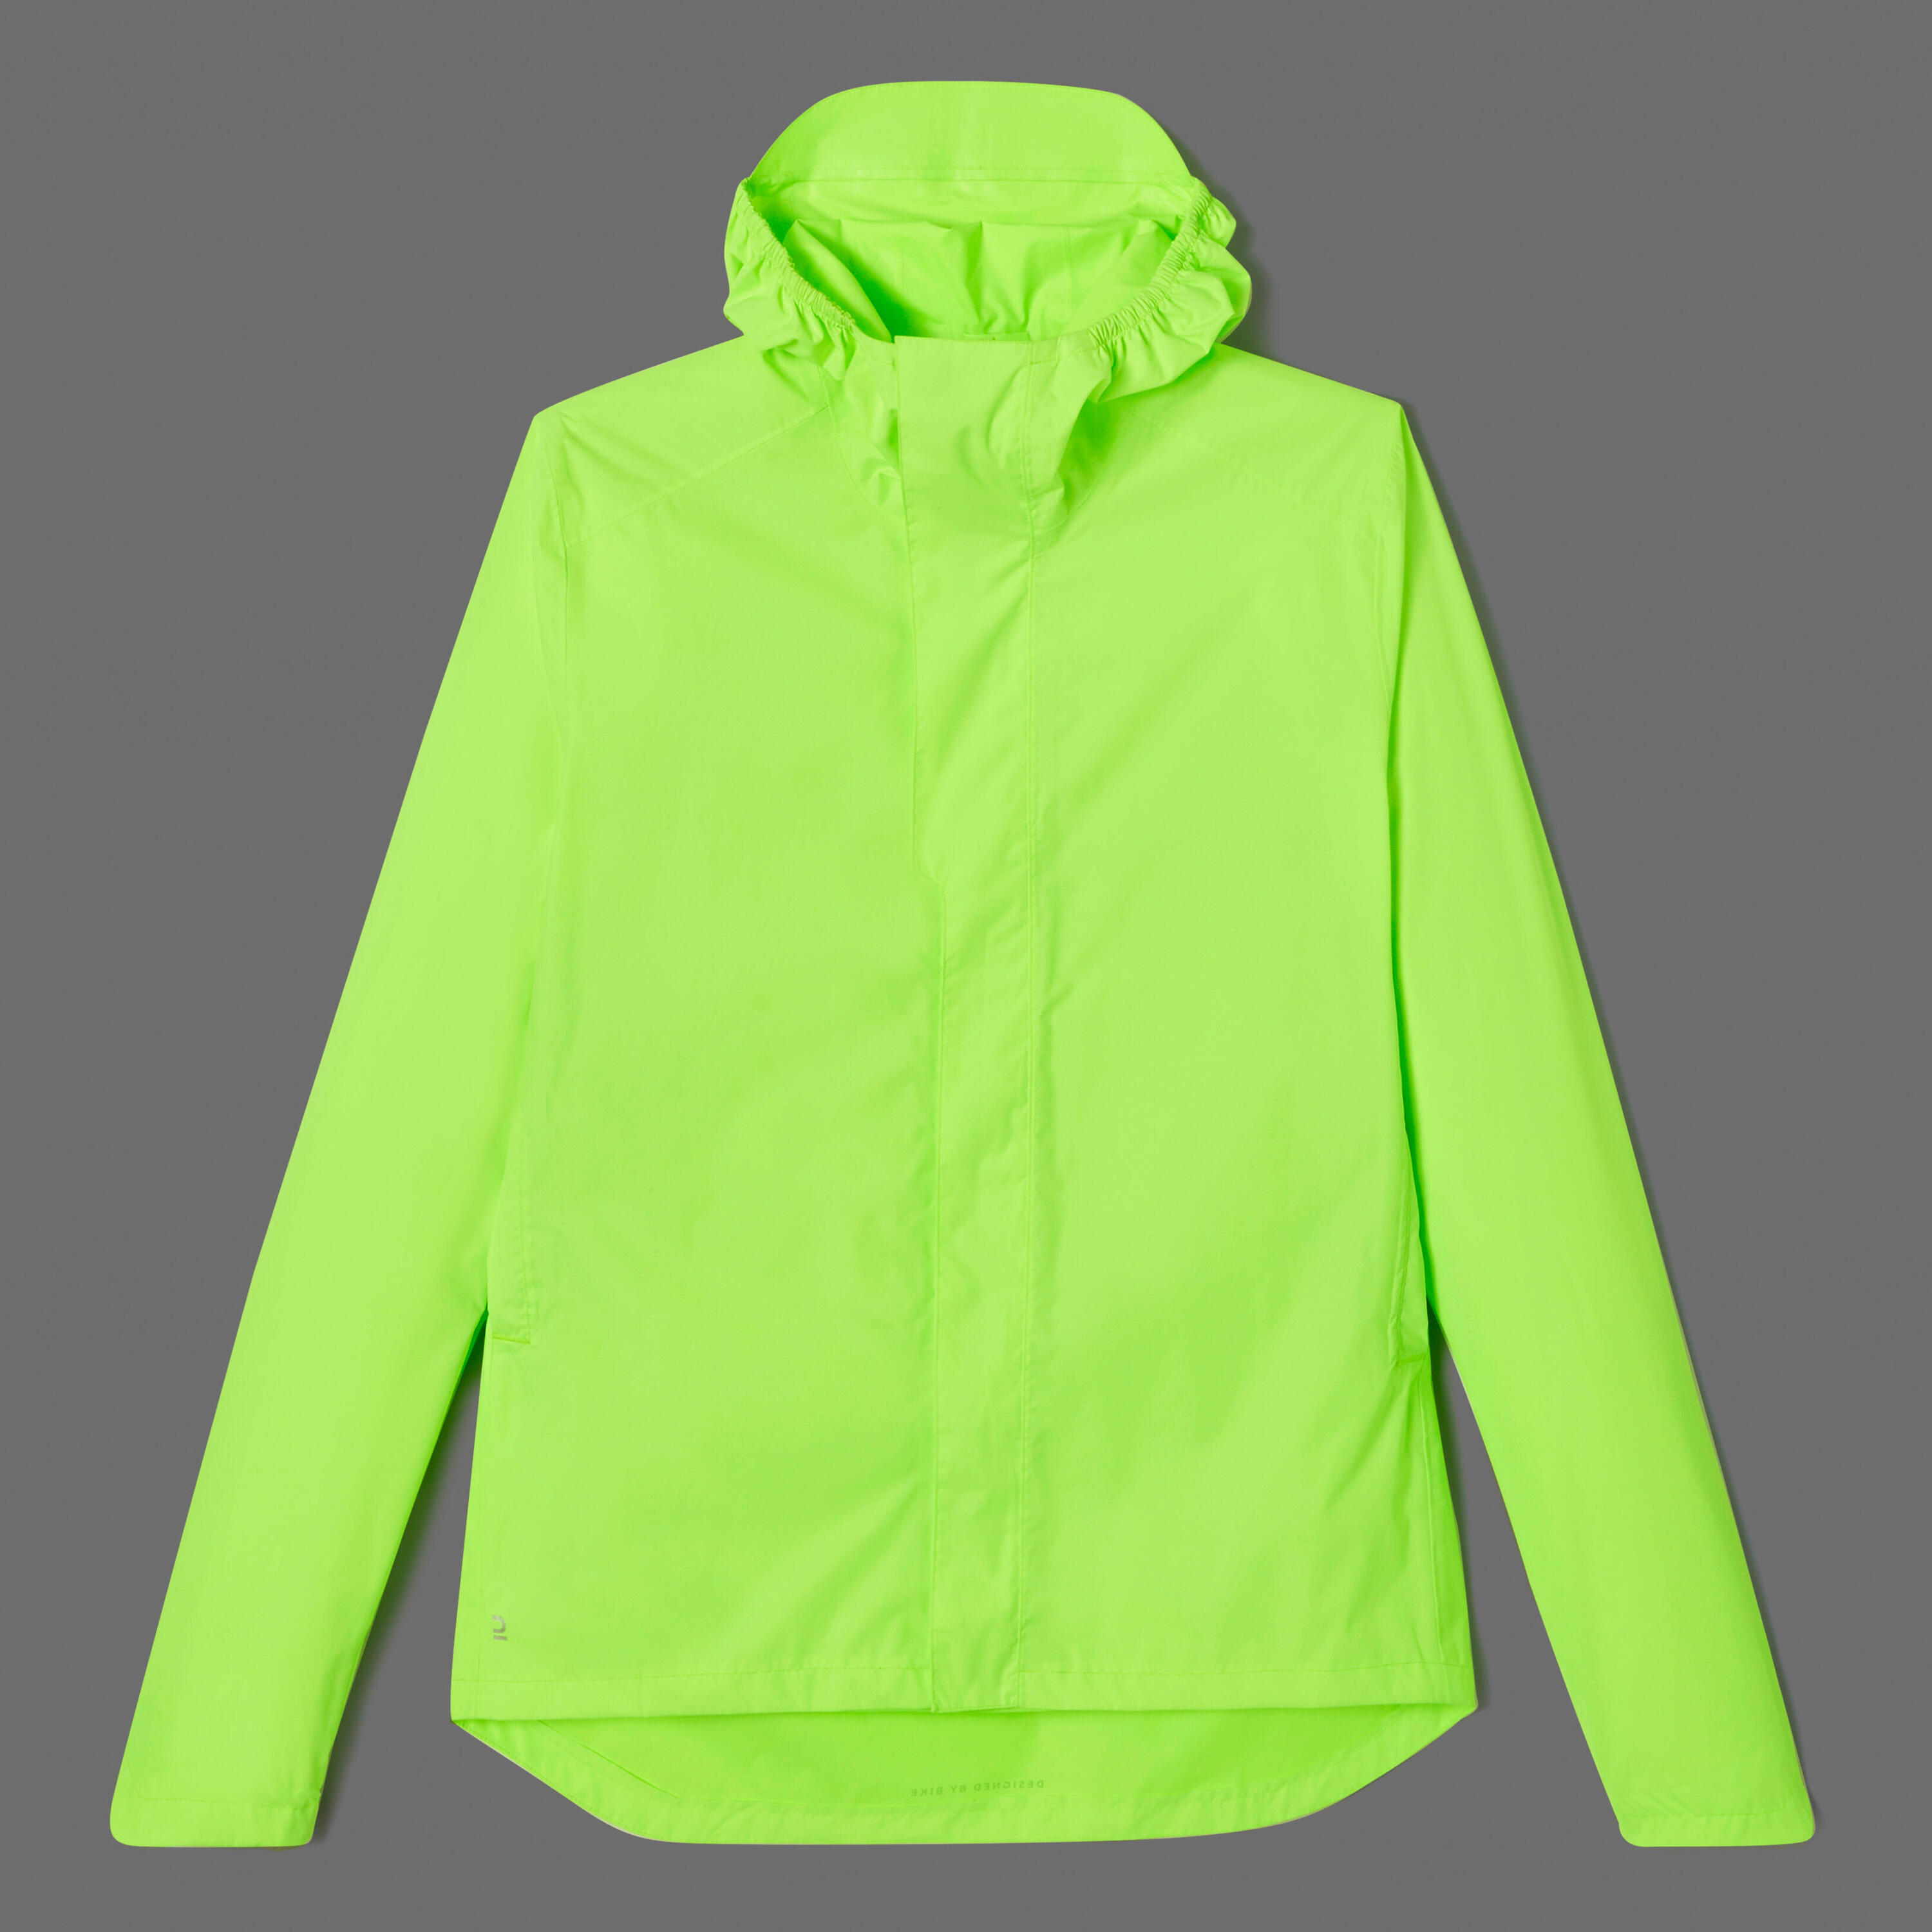 100 Men's Waterproof Urban Cycling Jacket - Neon Yellow 8/29